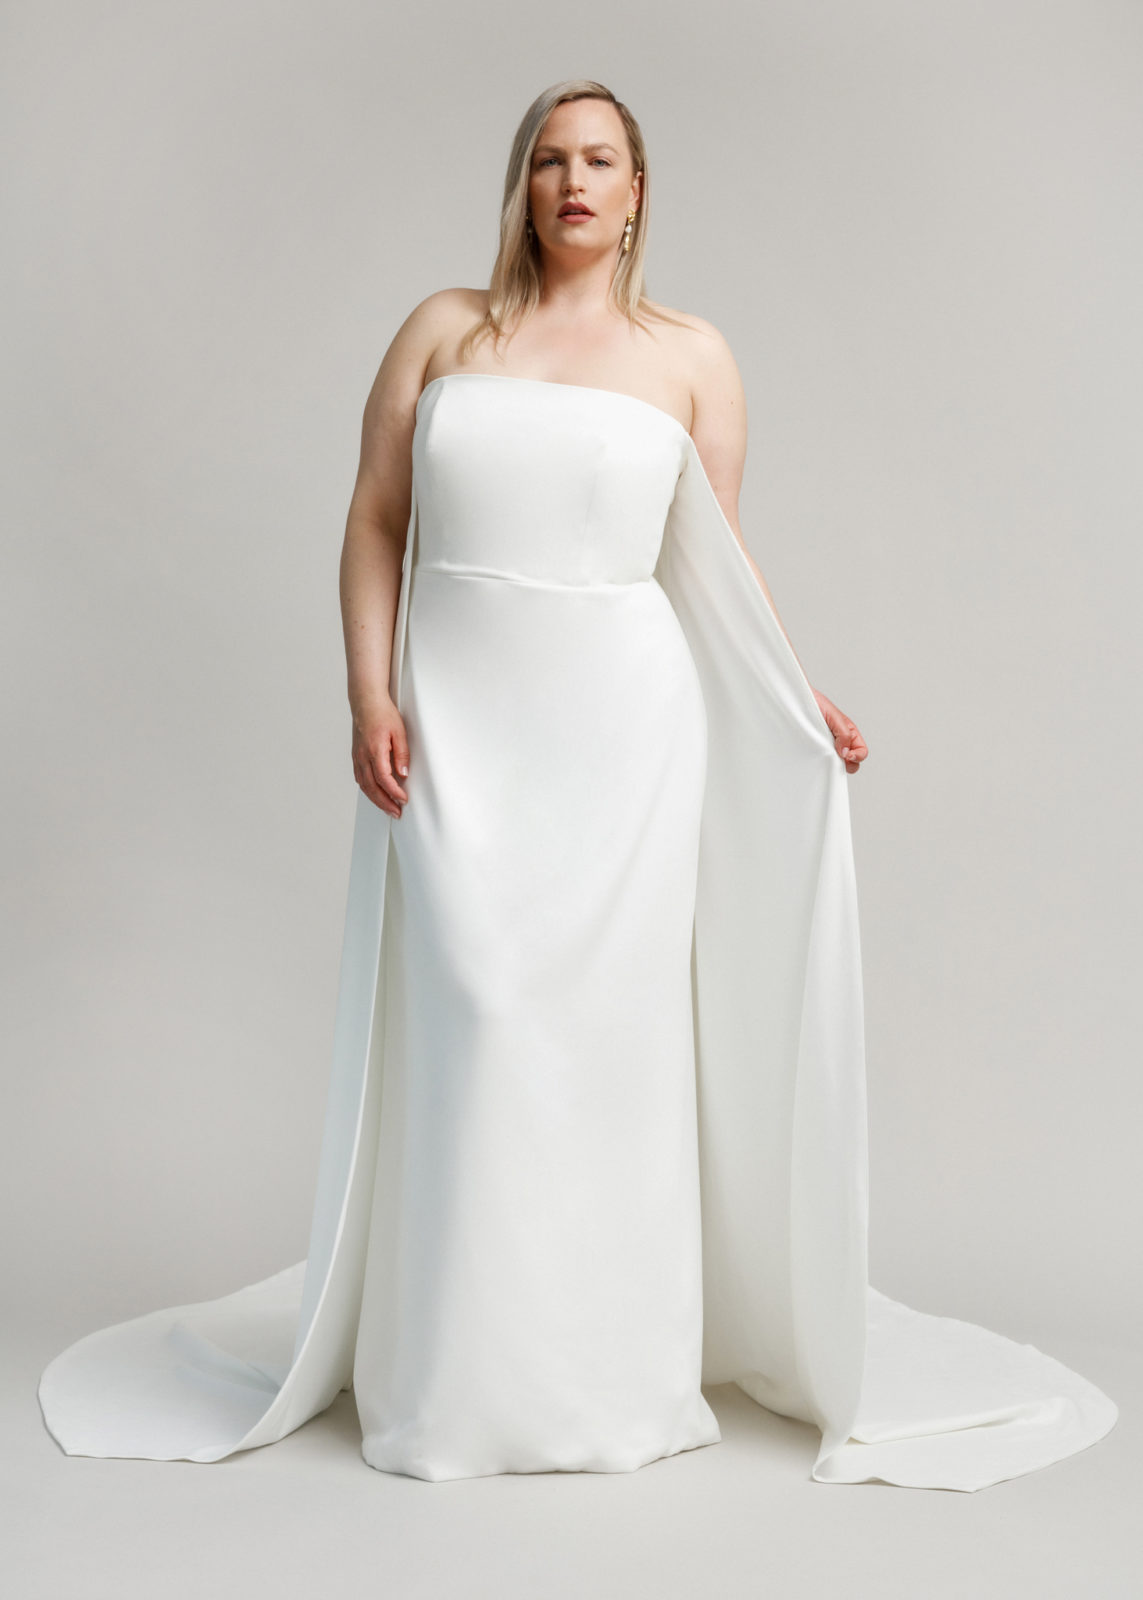 2022 bridal gowns by British Columbia designer Aesling, Brontë Bride's favourite Canadian bridal designers for 2022